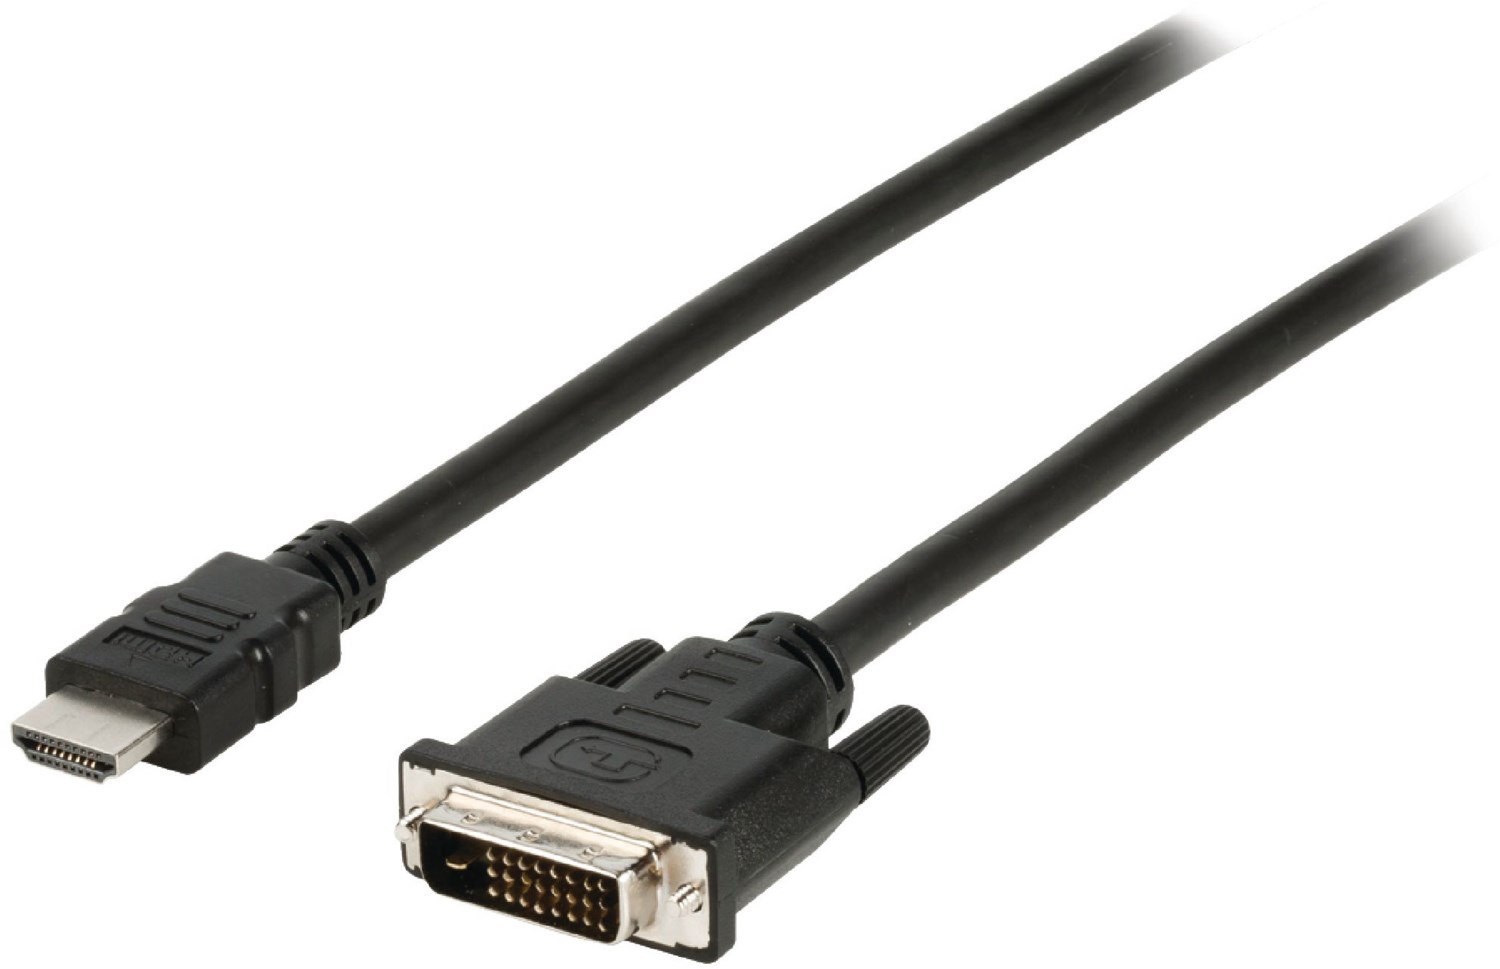 VLCP34800B100 HDMI/DVI-Kabel (10m) schwarz